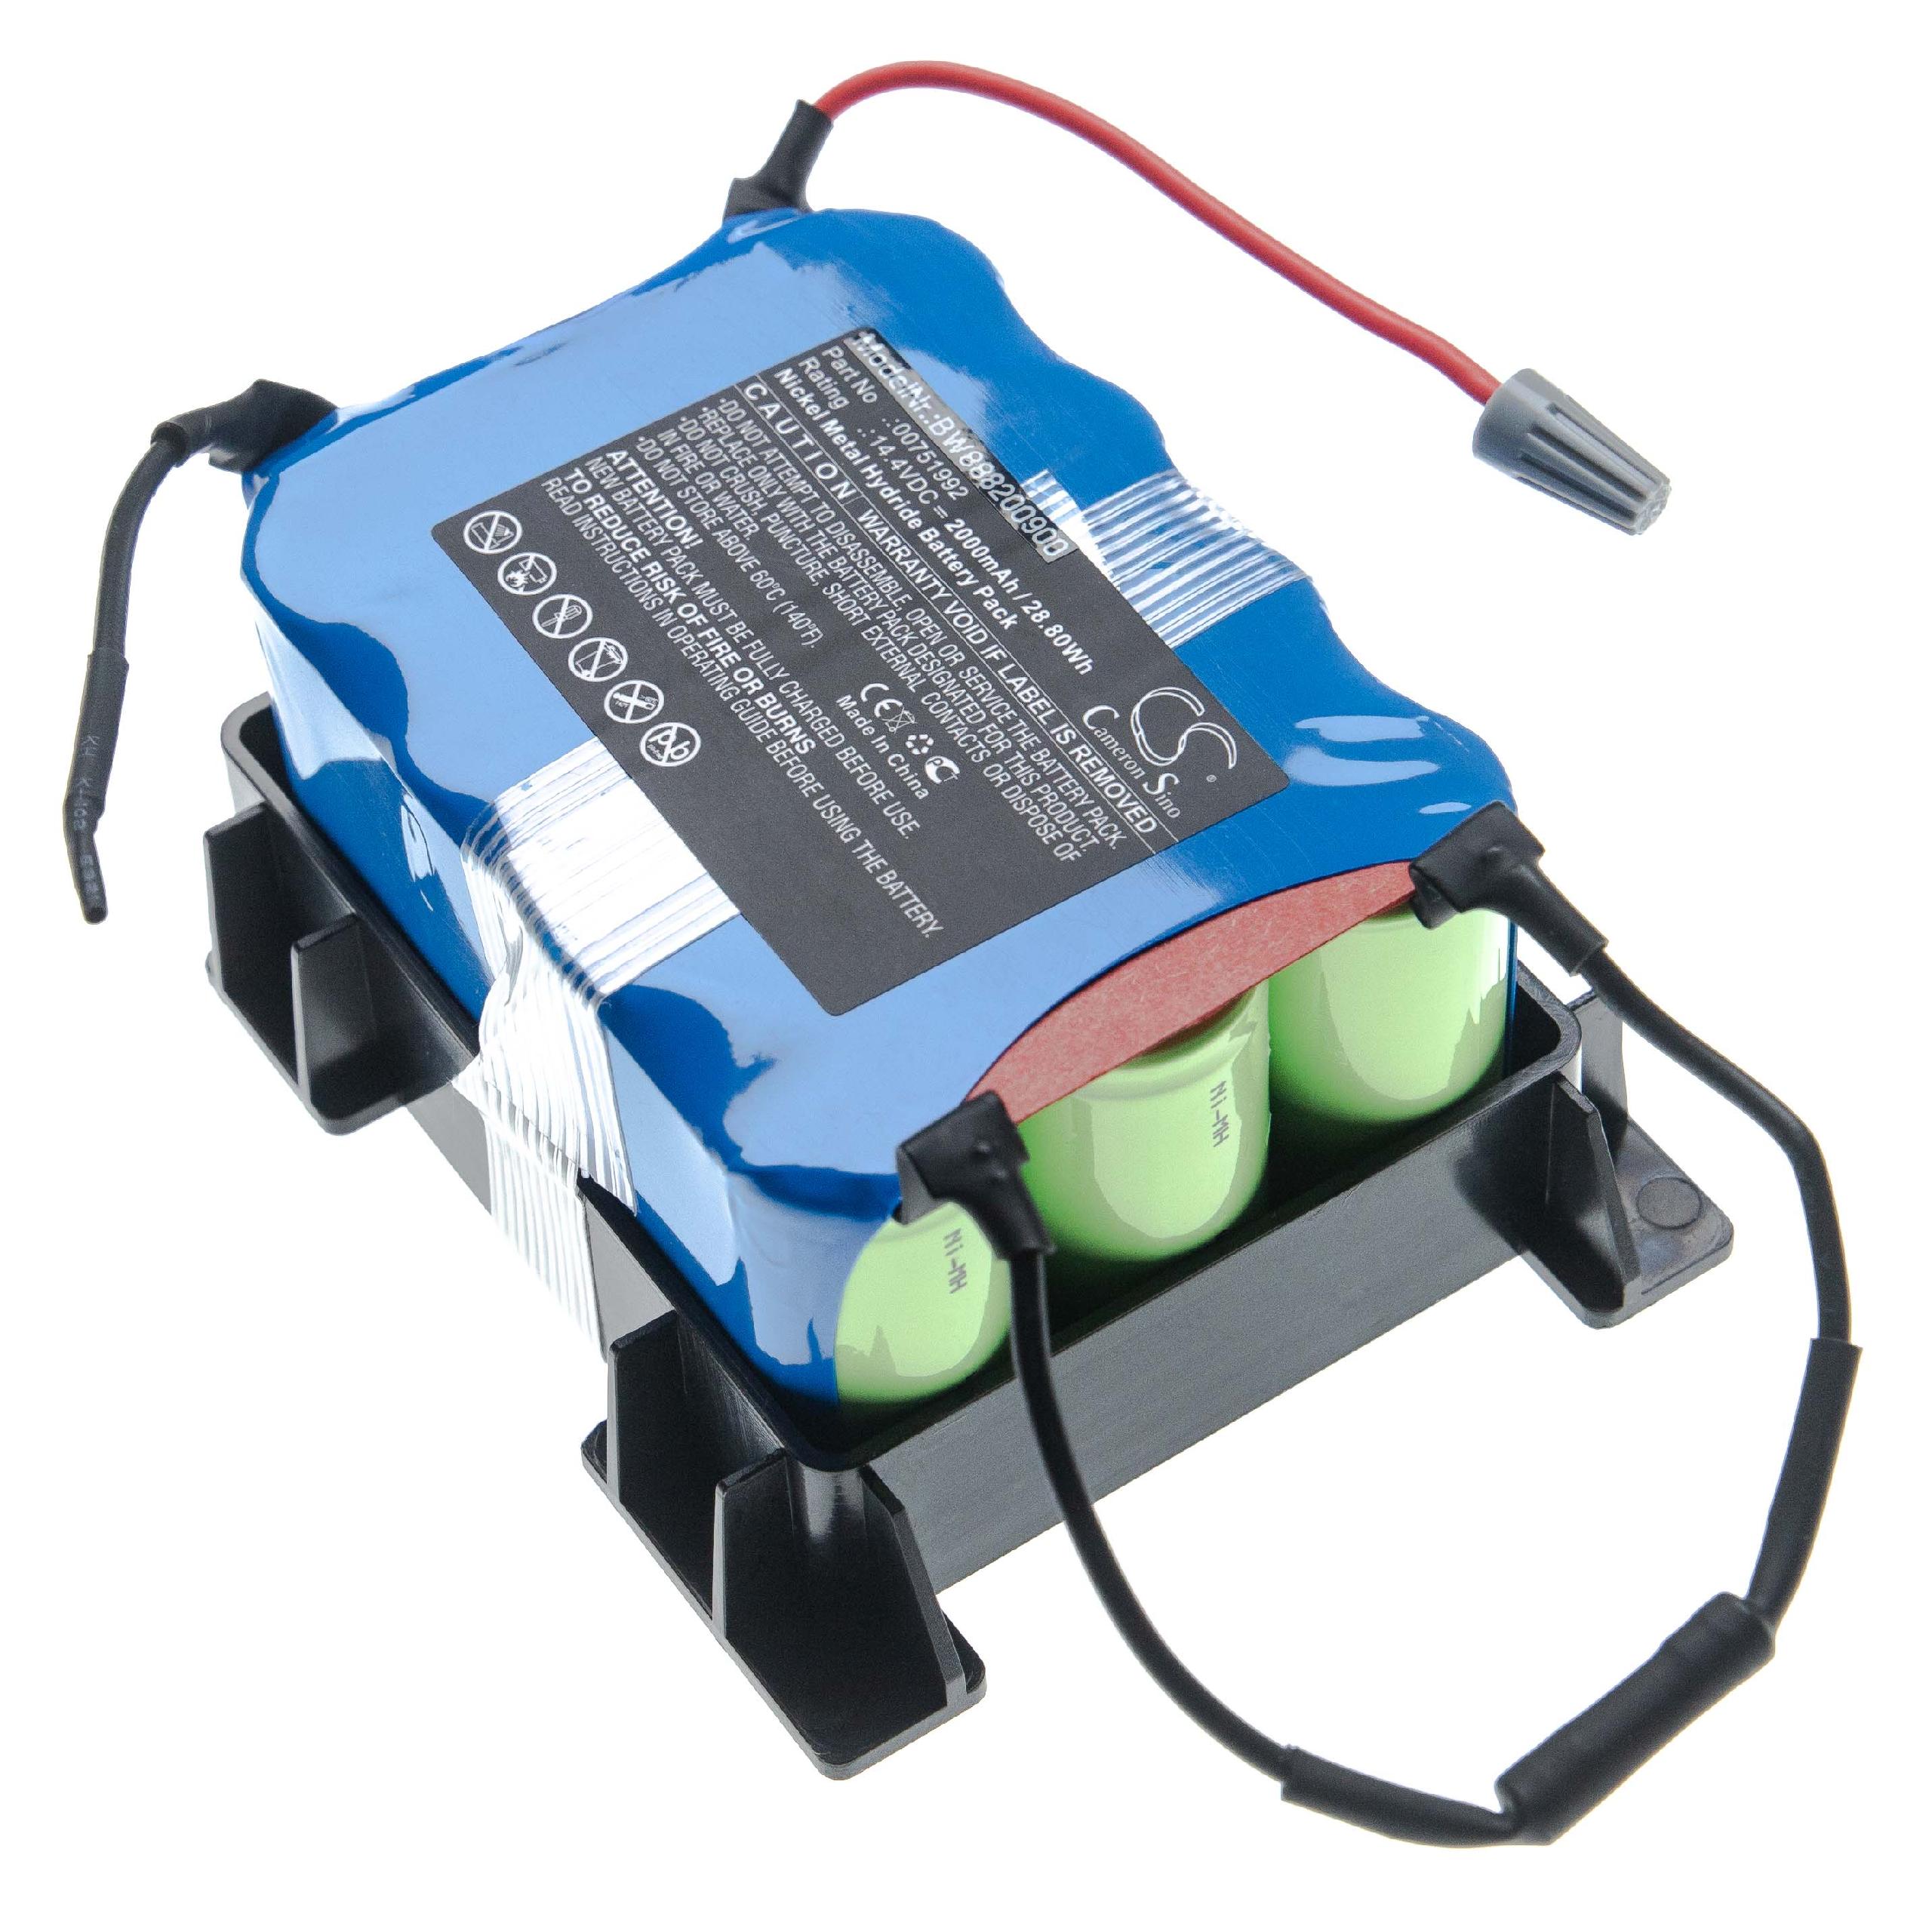 Akumulator do odkurzacza zamiennik Bosch/Siemens 00751992 - 2000 mAh 14,4 V NiMH